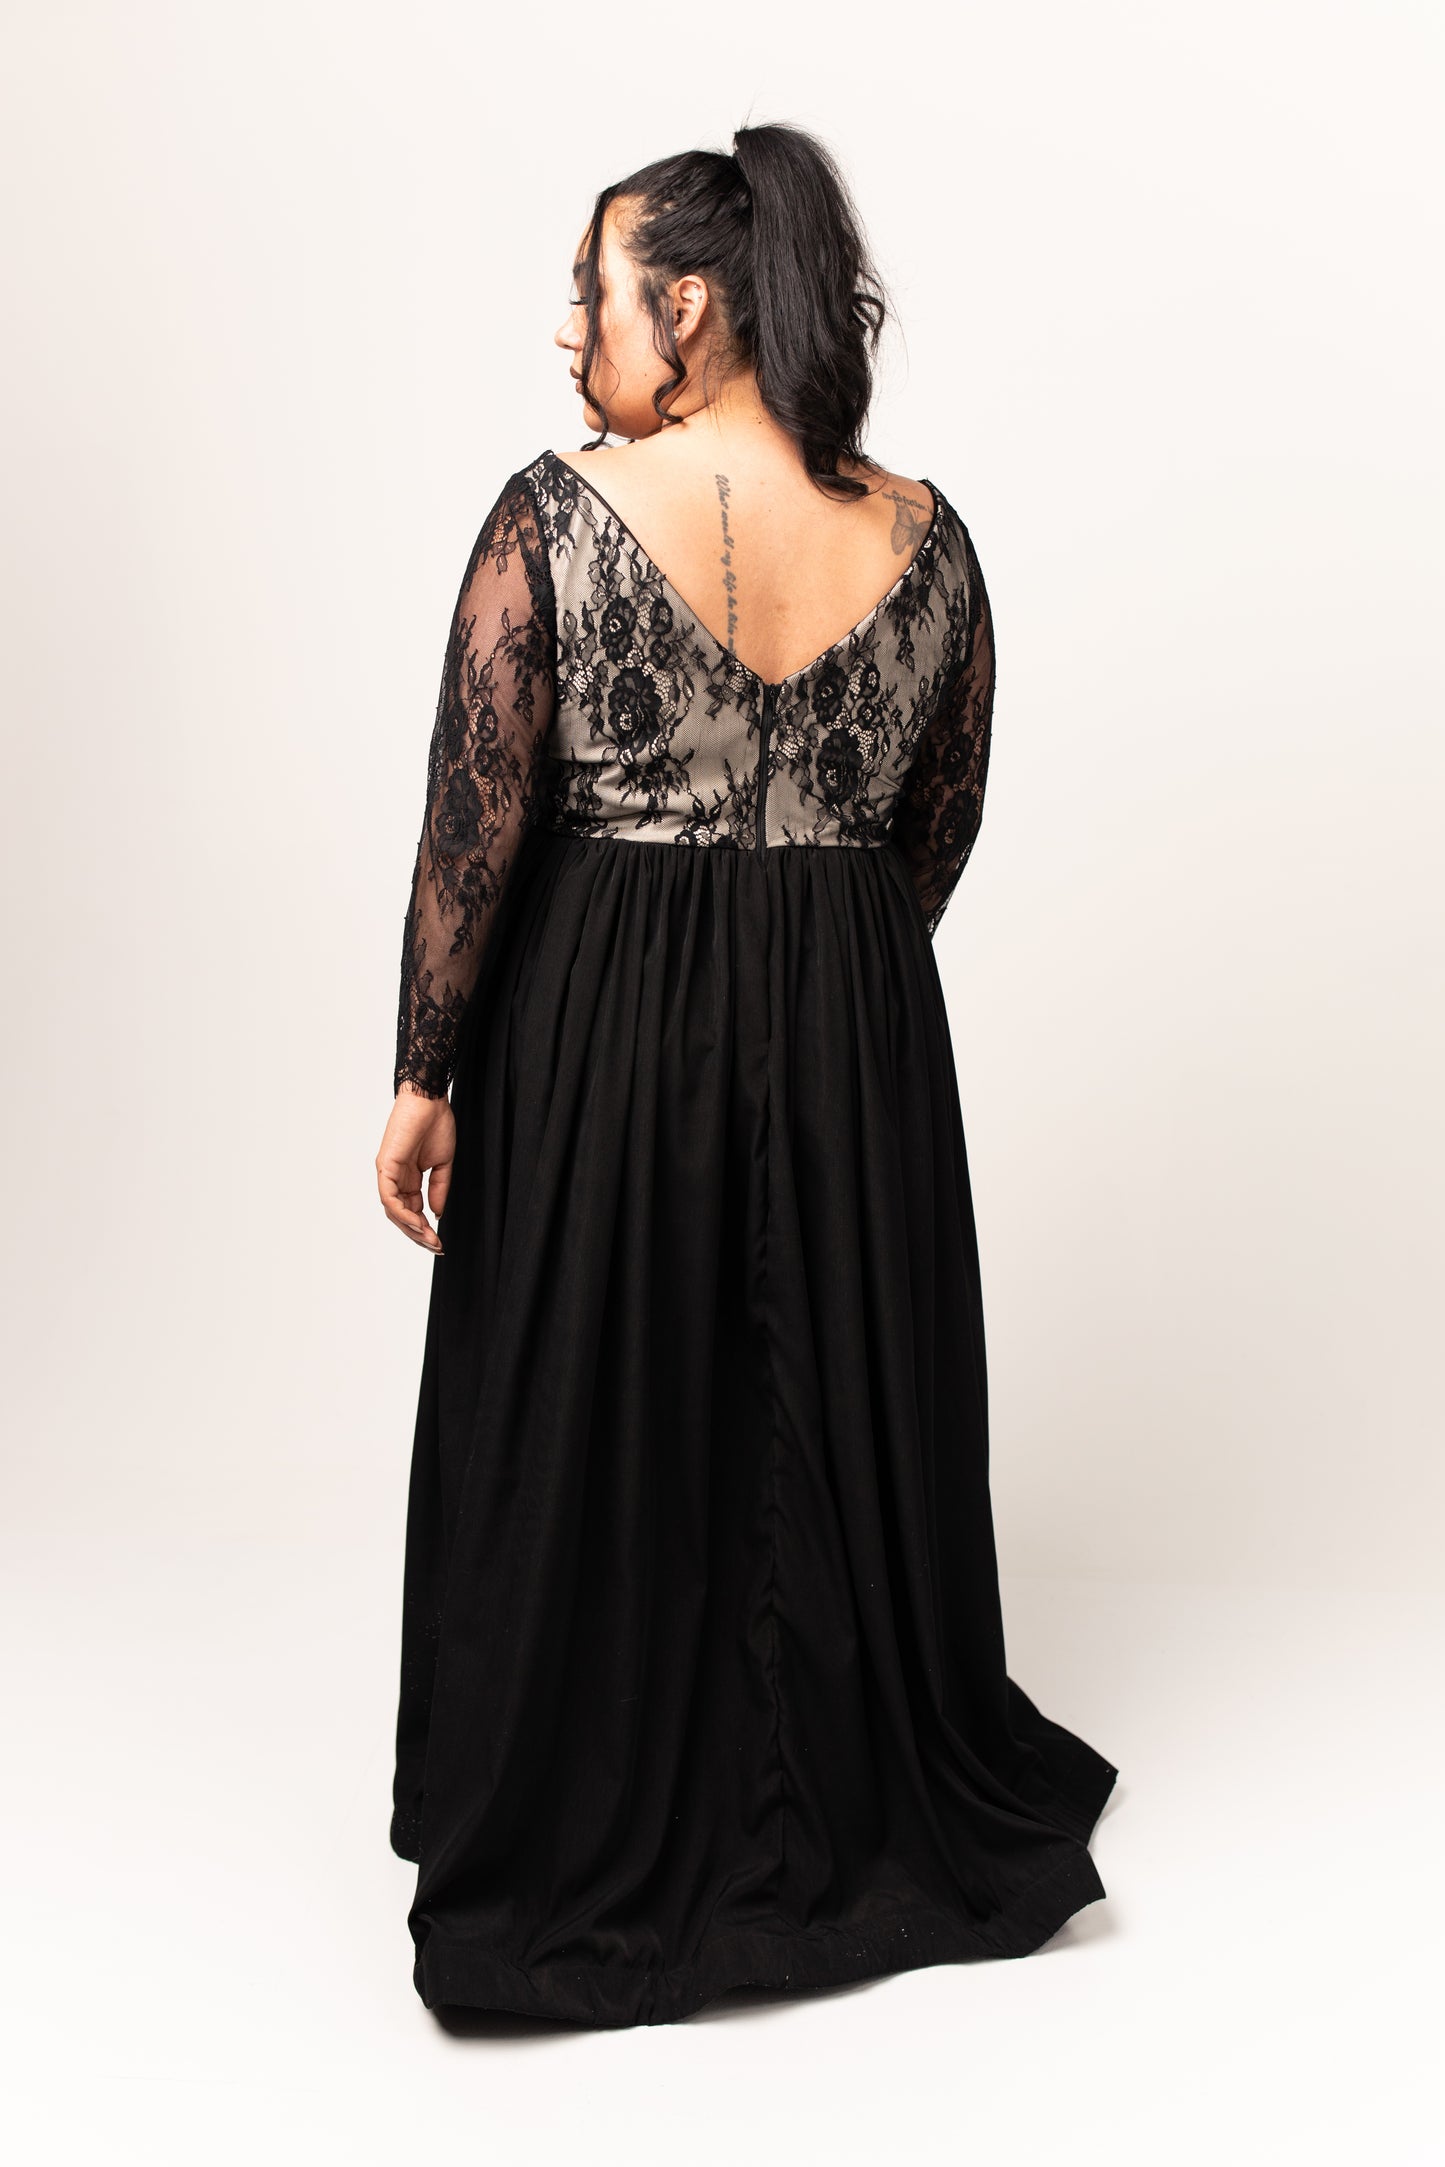 Size 14 Sample - Fallon Gown